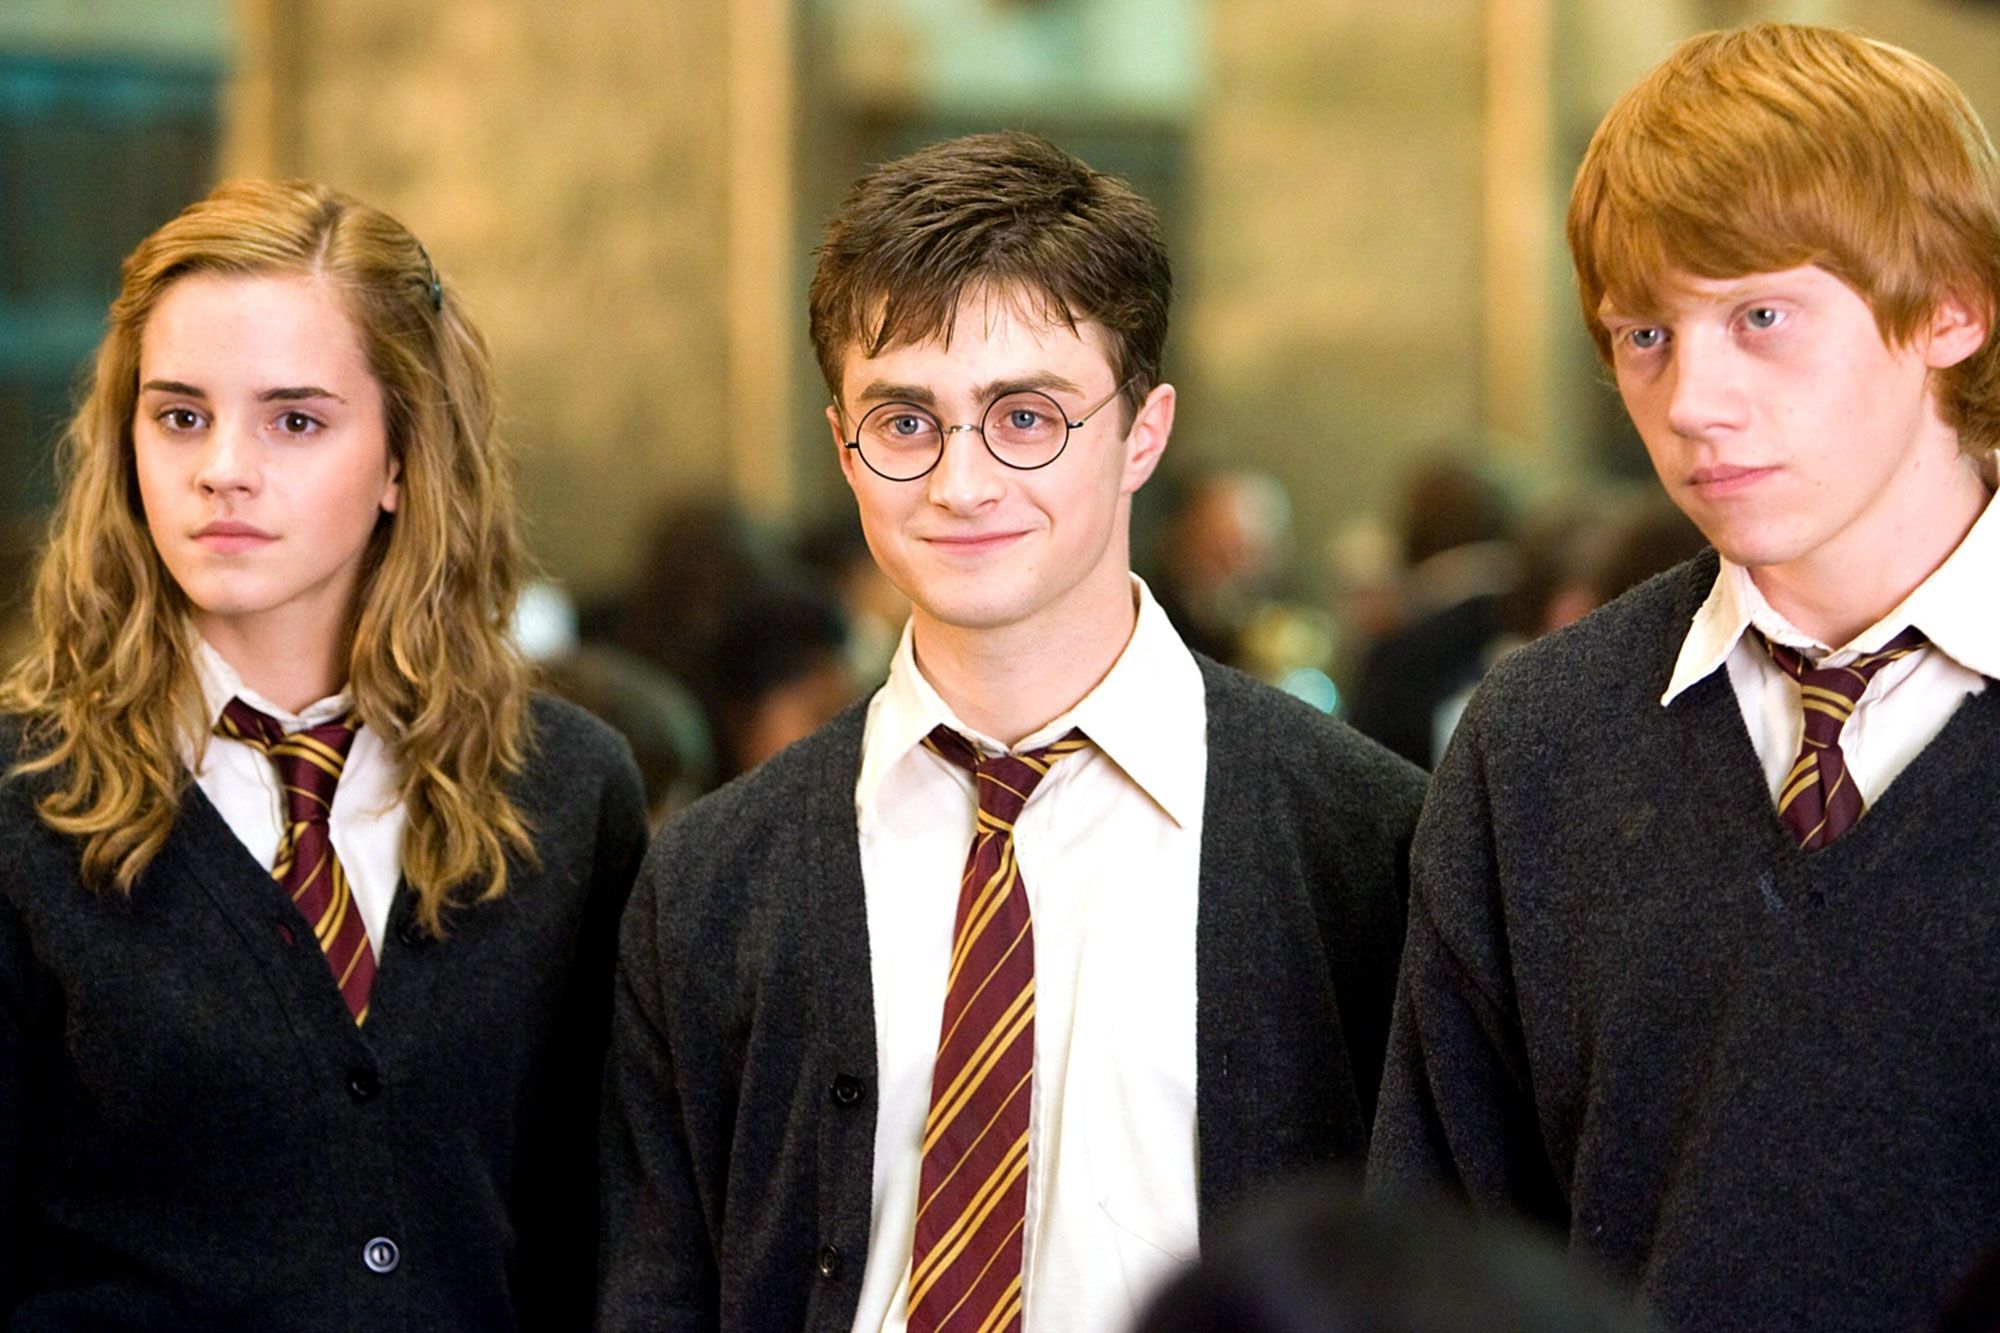 Harry Potter TV series rumours addressed by Warner Bros